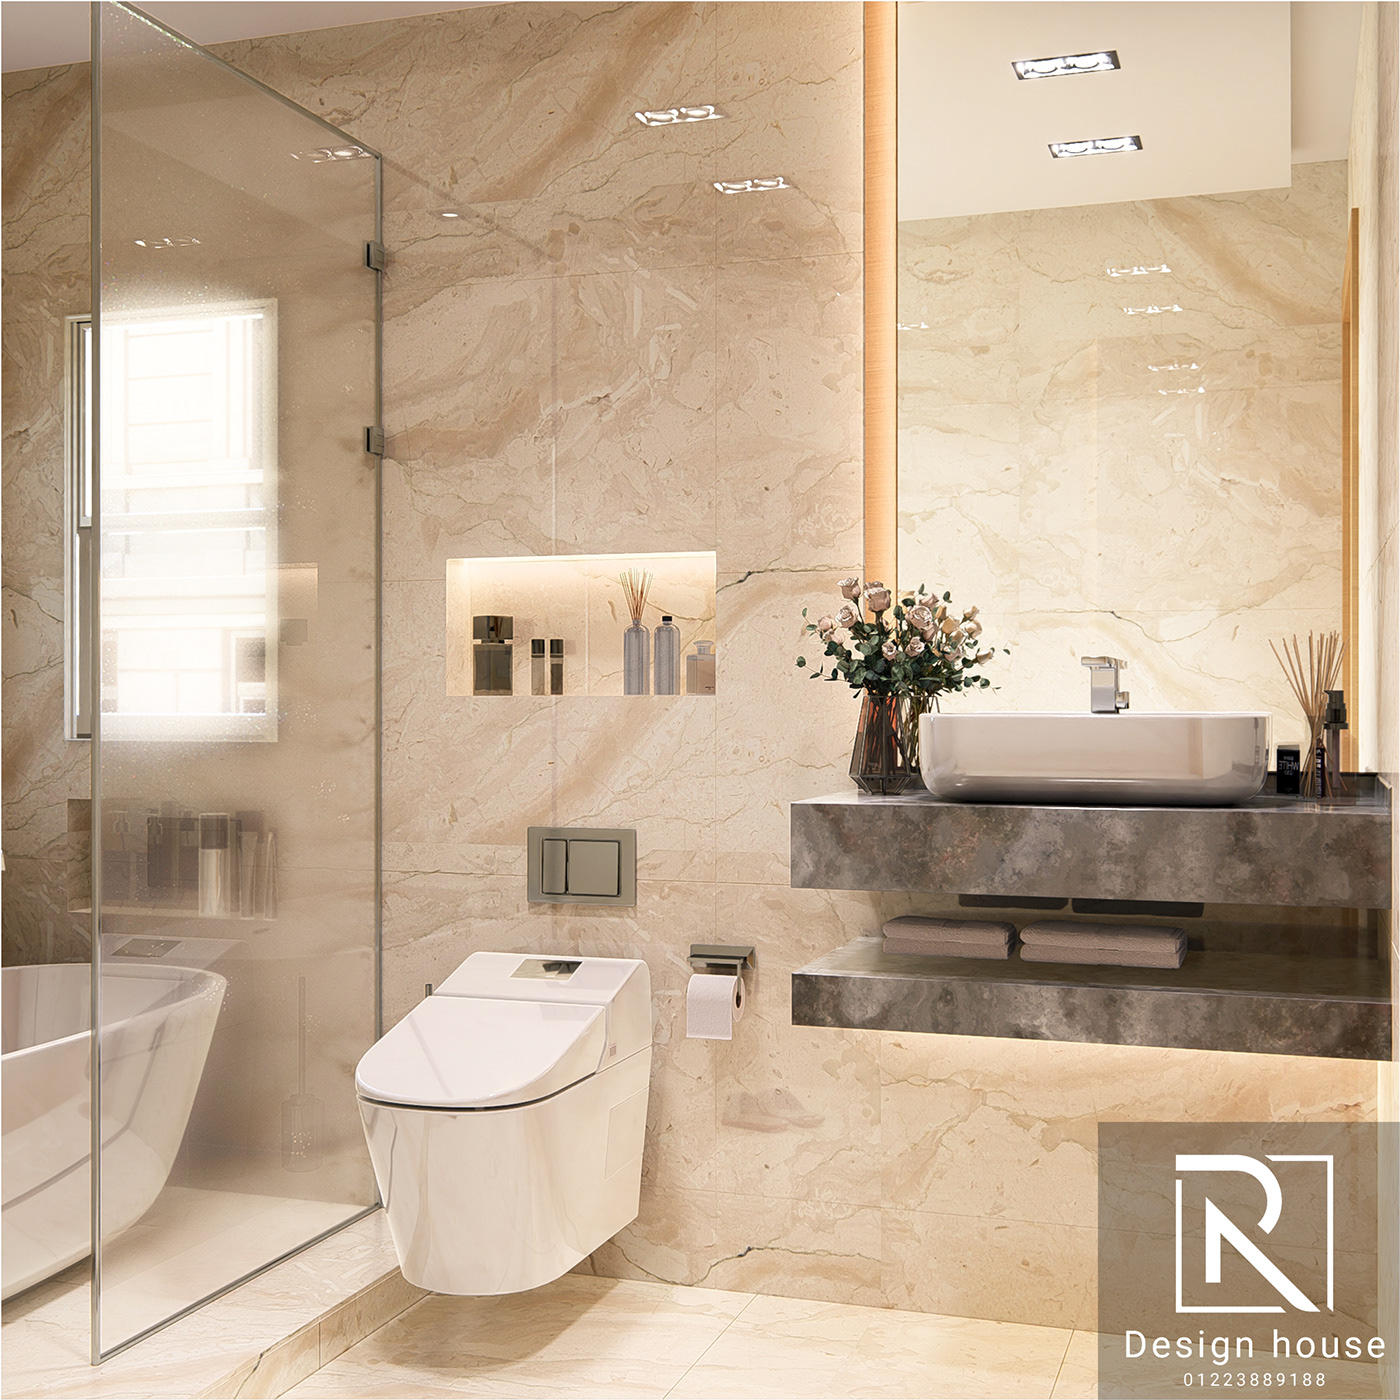 3 Bathrooms unit options interior design  Render 3D architecture visualization toilet bathroom modern design